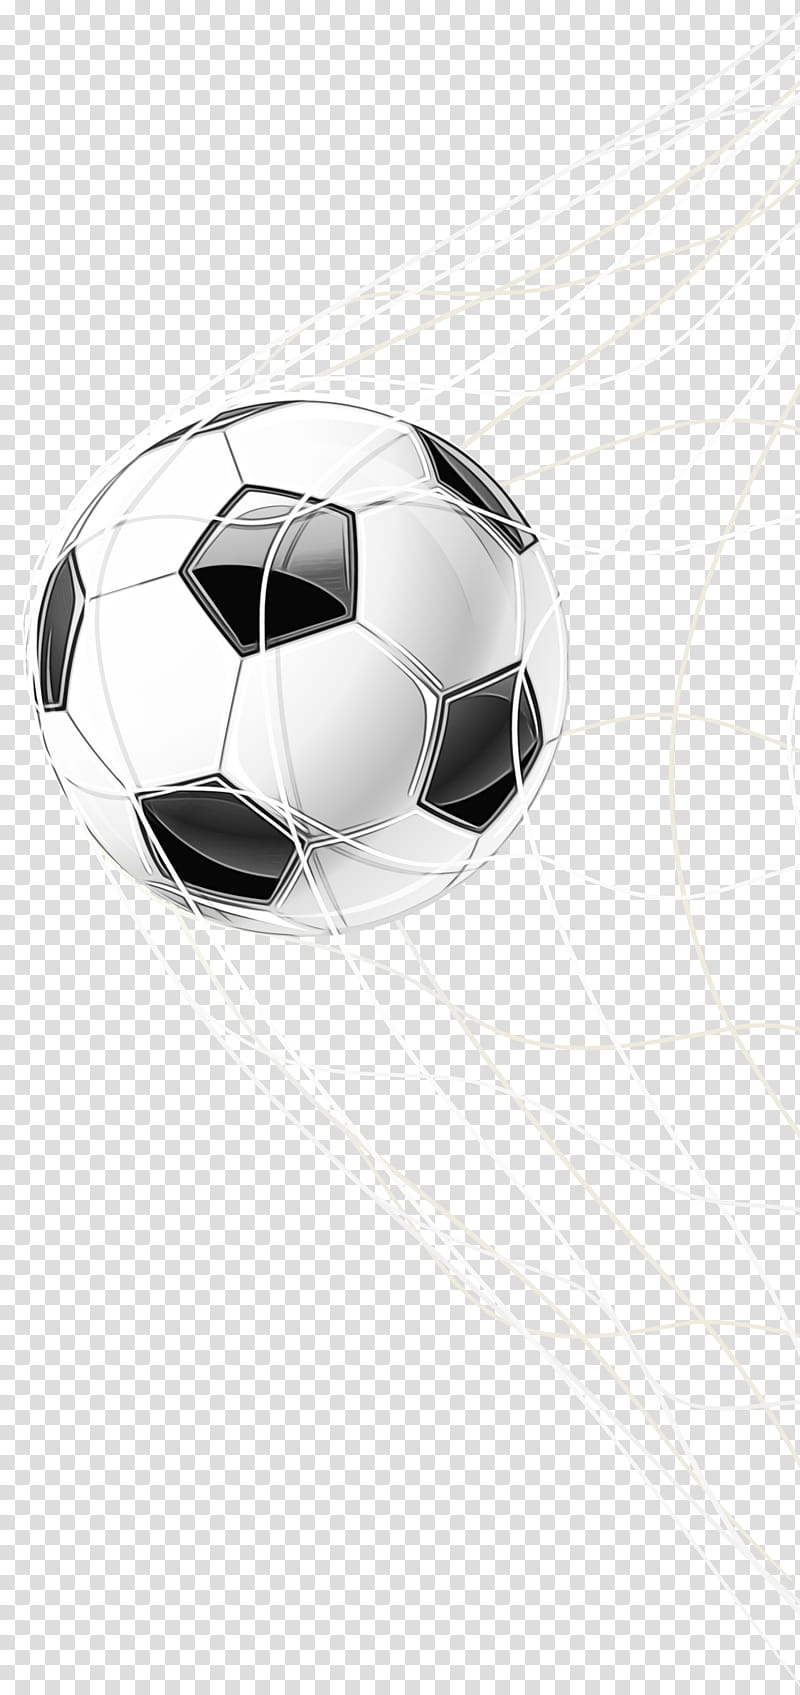 Soccer Ball, Football, Football Player, Brazil National Football Team, Argentina National Football Team, Belgium National Football Team, Arco, Goal transparent background PNG clipart